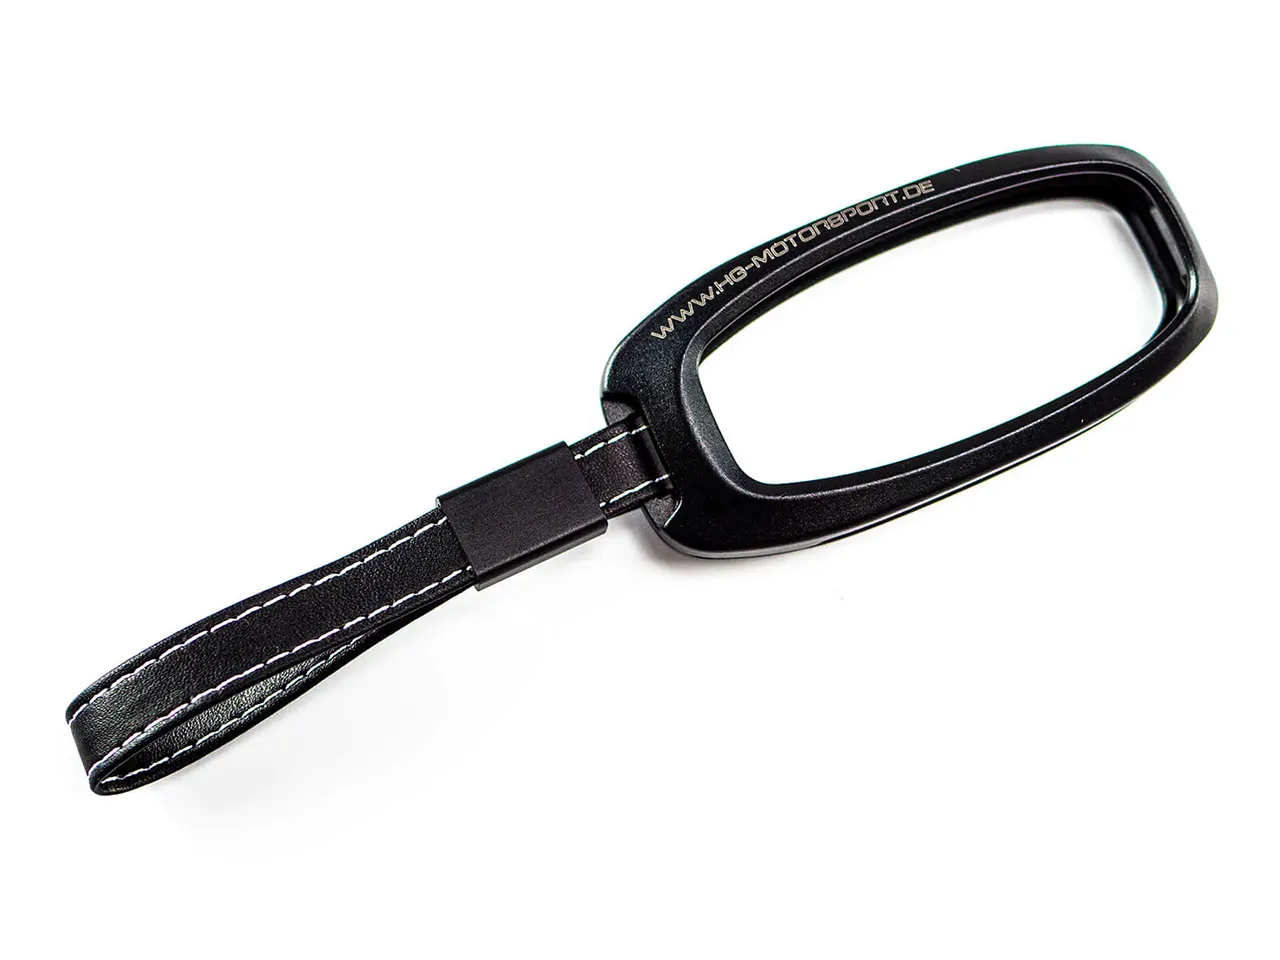 Alu Schlüssel Cover für BMW Schlüssel inkl. Lederband HEK34-B6, 19,95 €